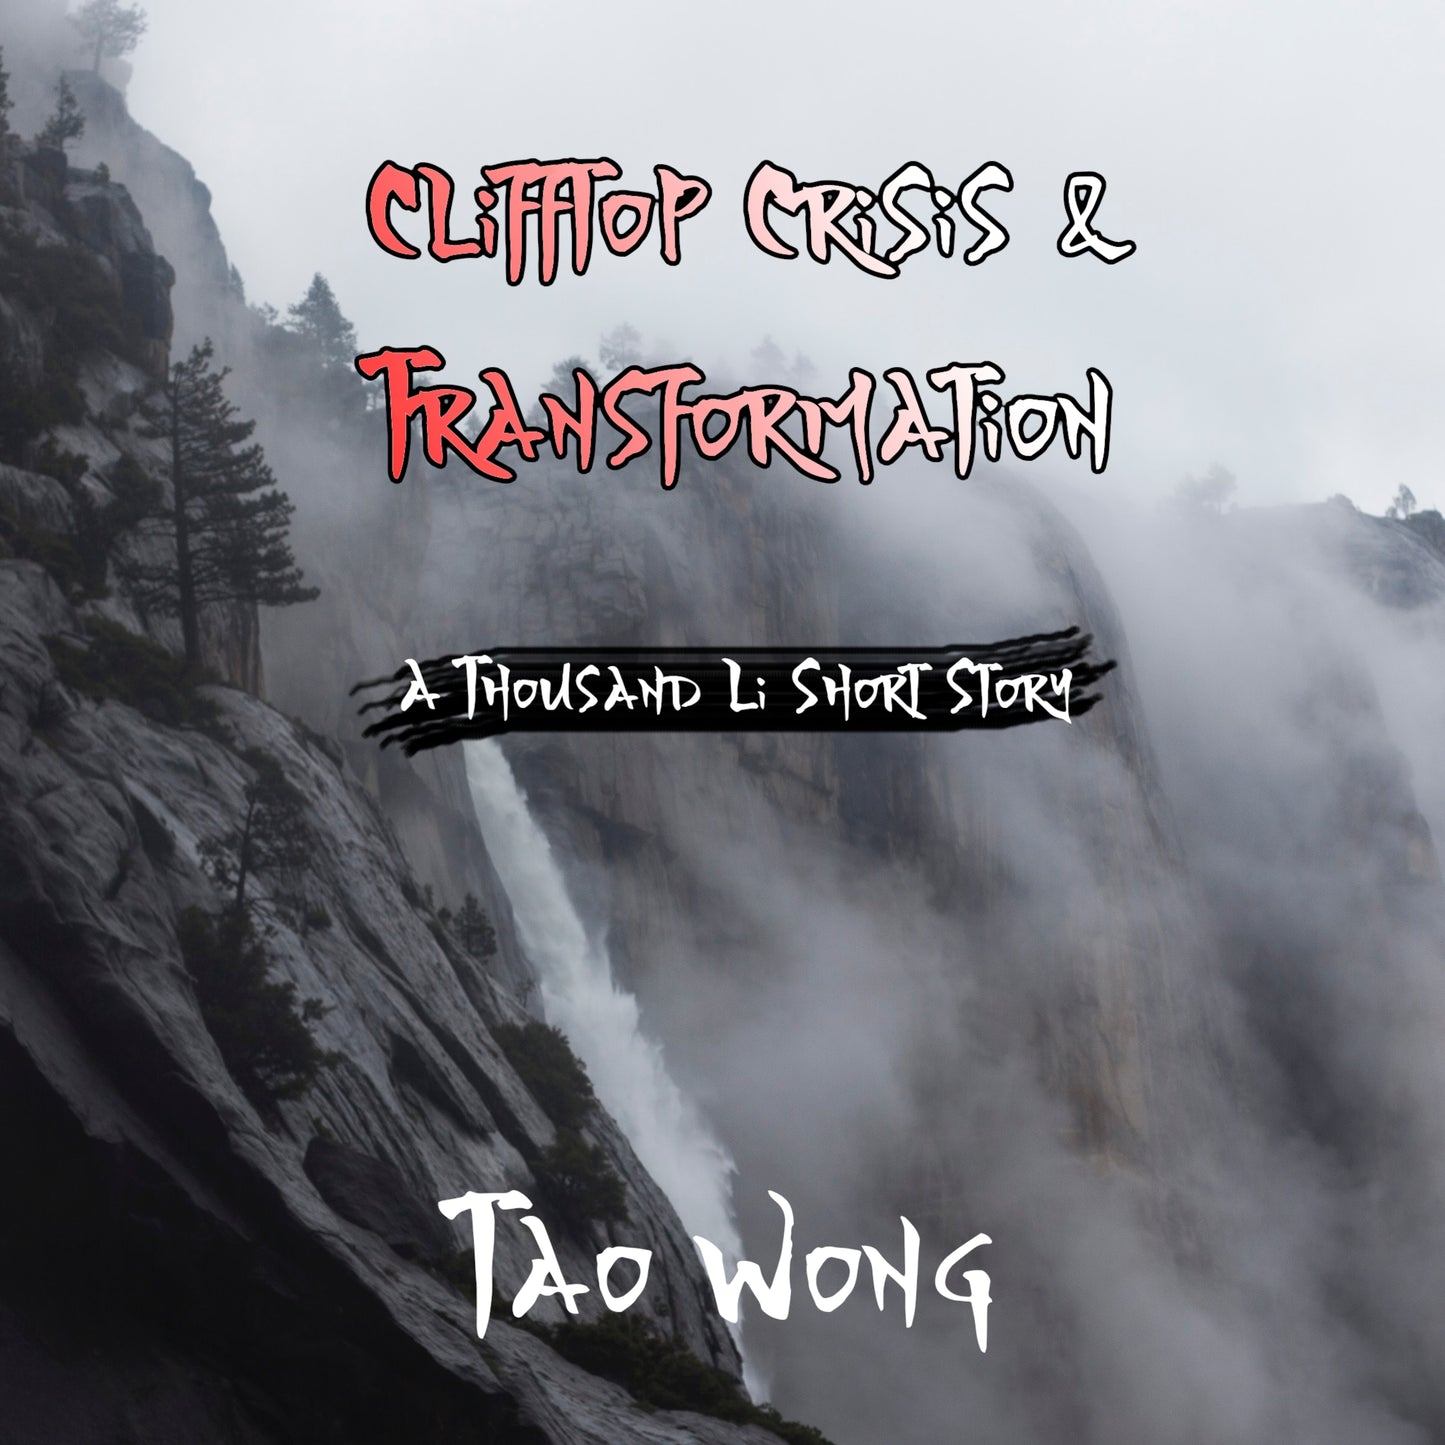 Clifftop Crisis & Transformation (An A Thousand Li Short Story)